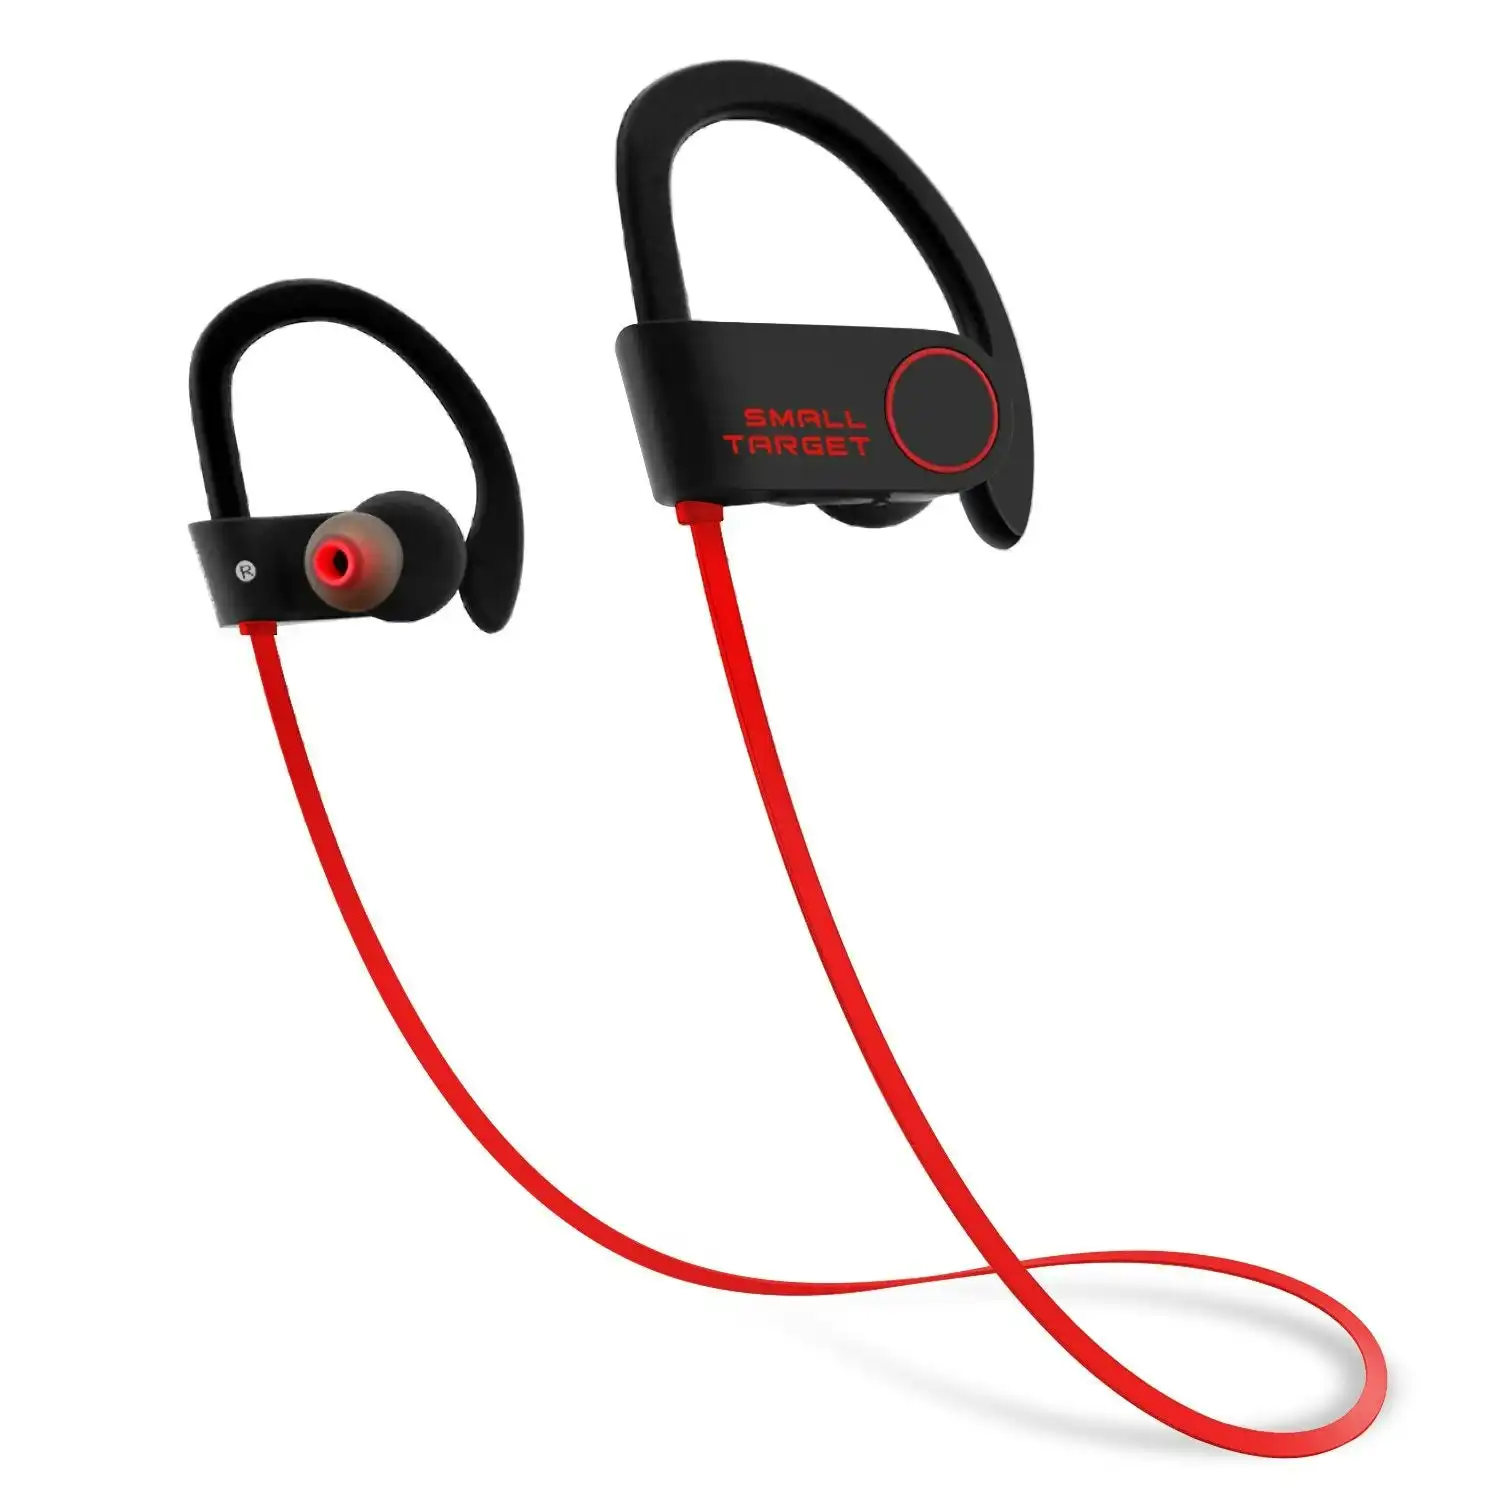 Small Target Bluetooth Headphones, Best Wireless Sport Earphones w/Mic IPX7 Waterproof Stable Fit in Ear Earbuds Noise Isolating Stereo Headset 9-Hour